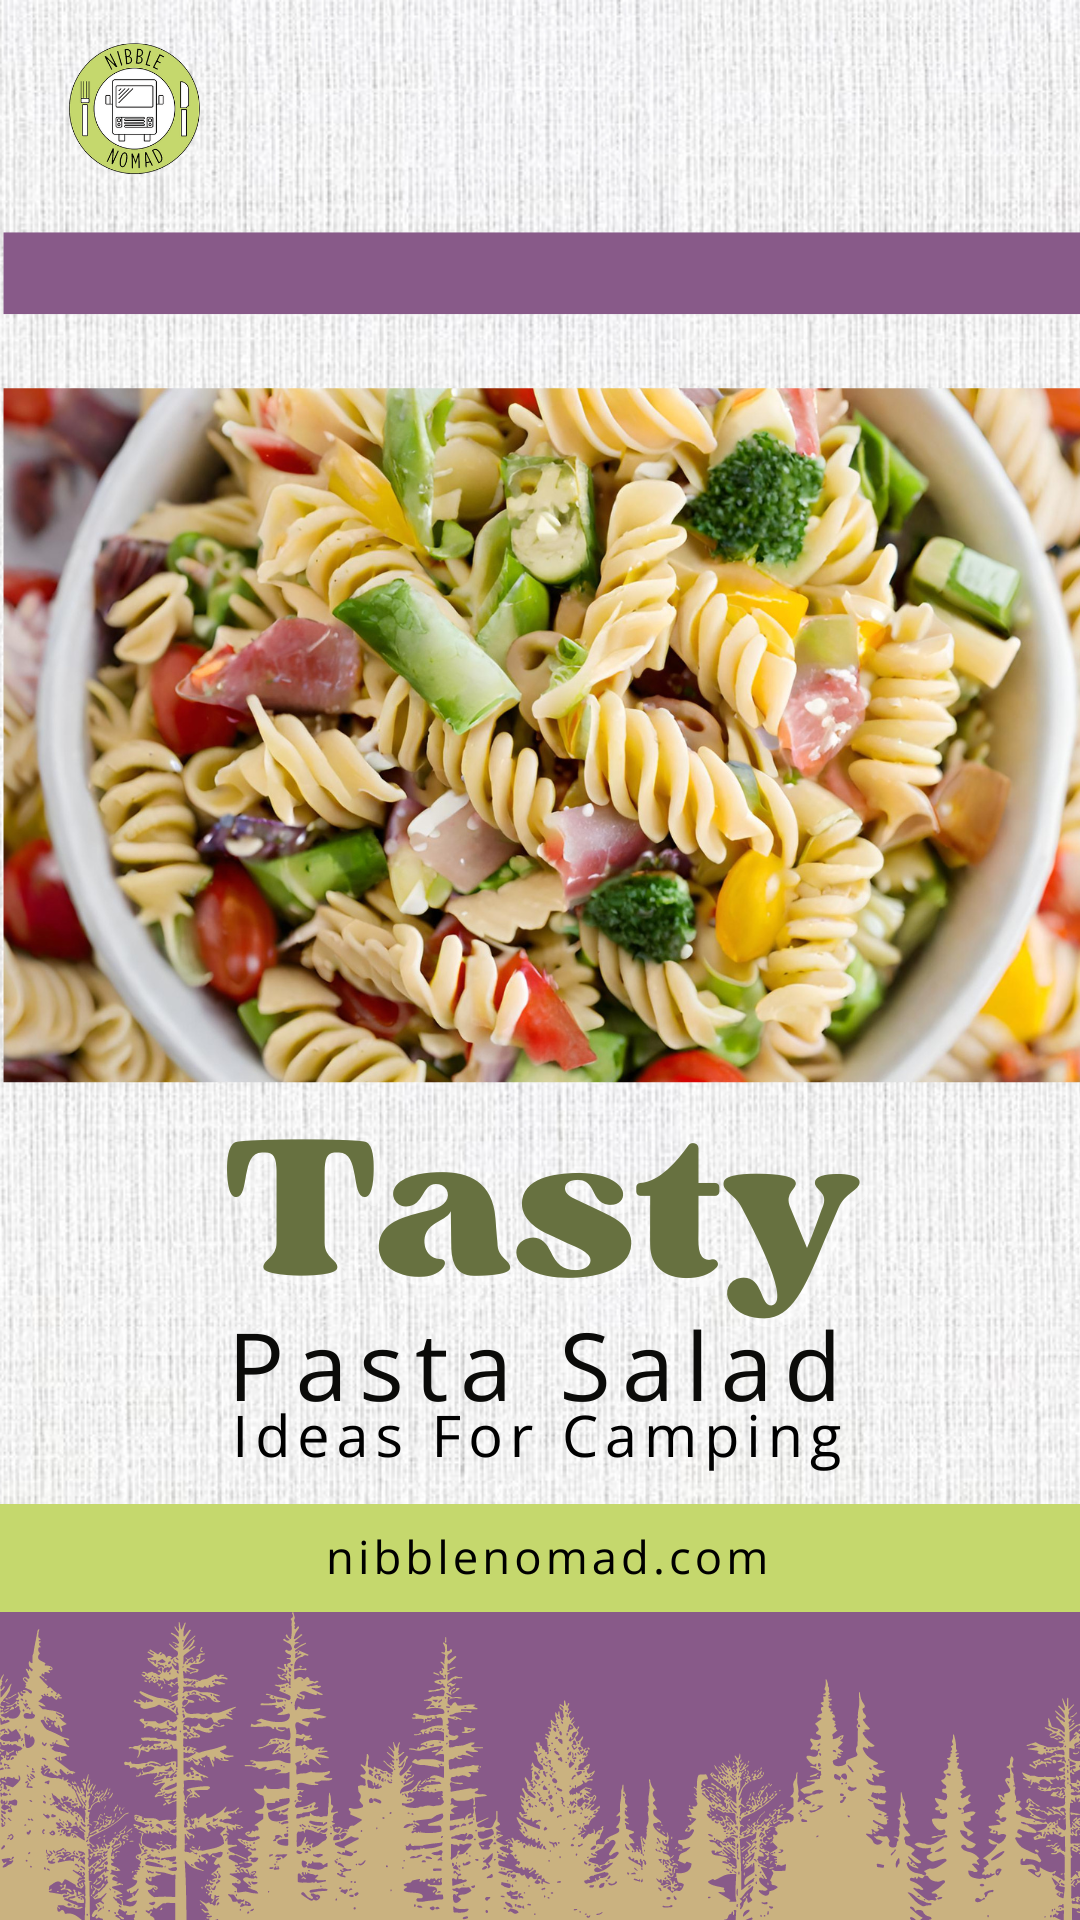 Tasty Pasta Salad Ideas for Camping